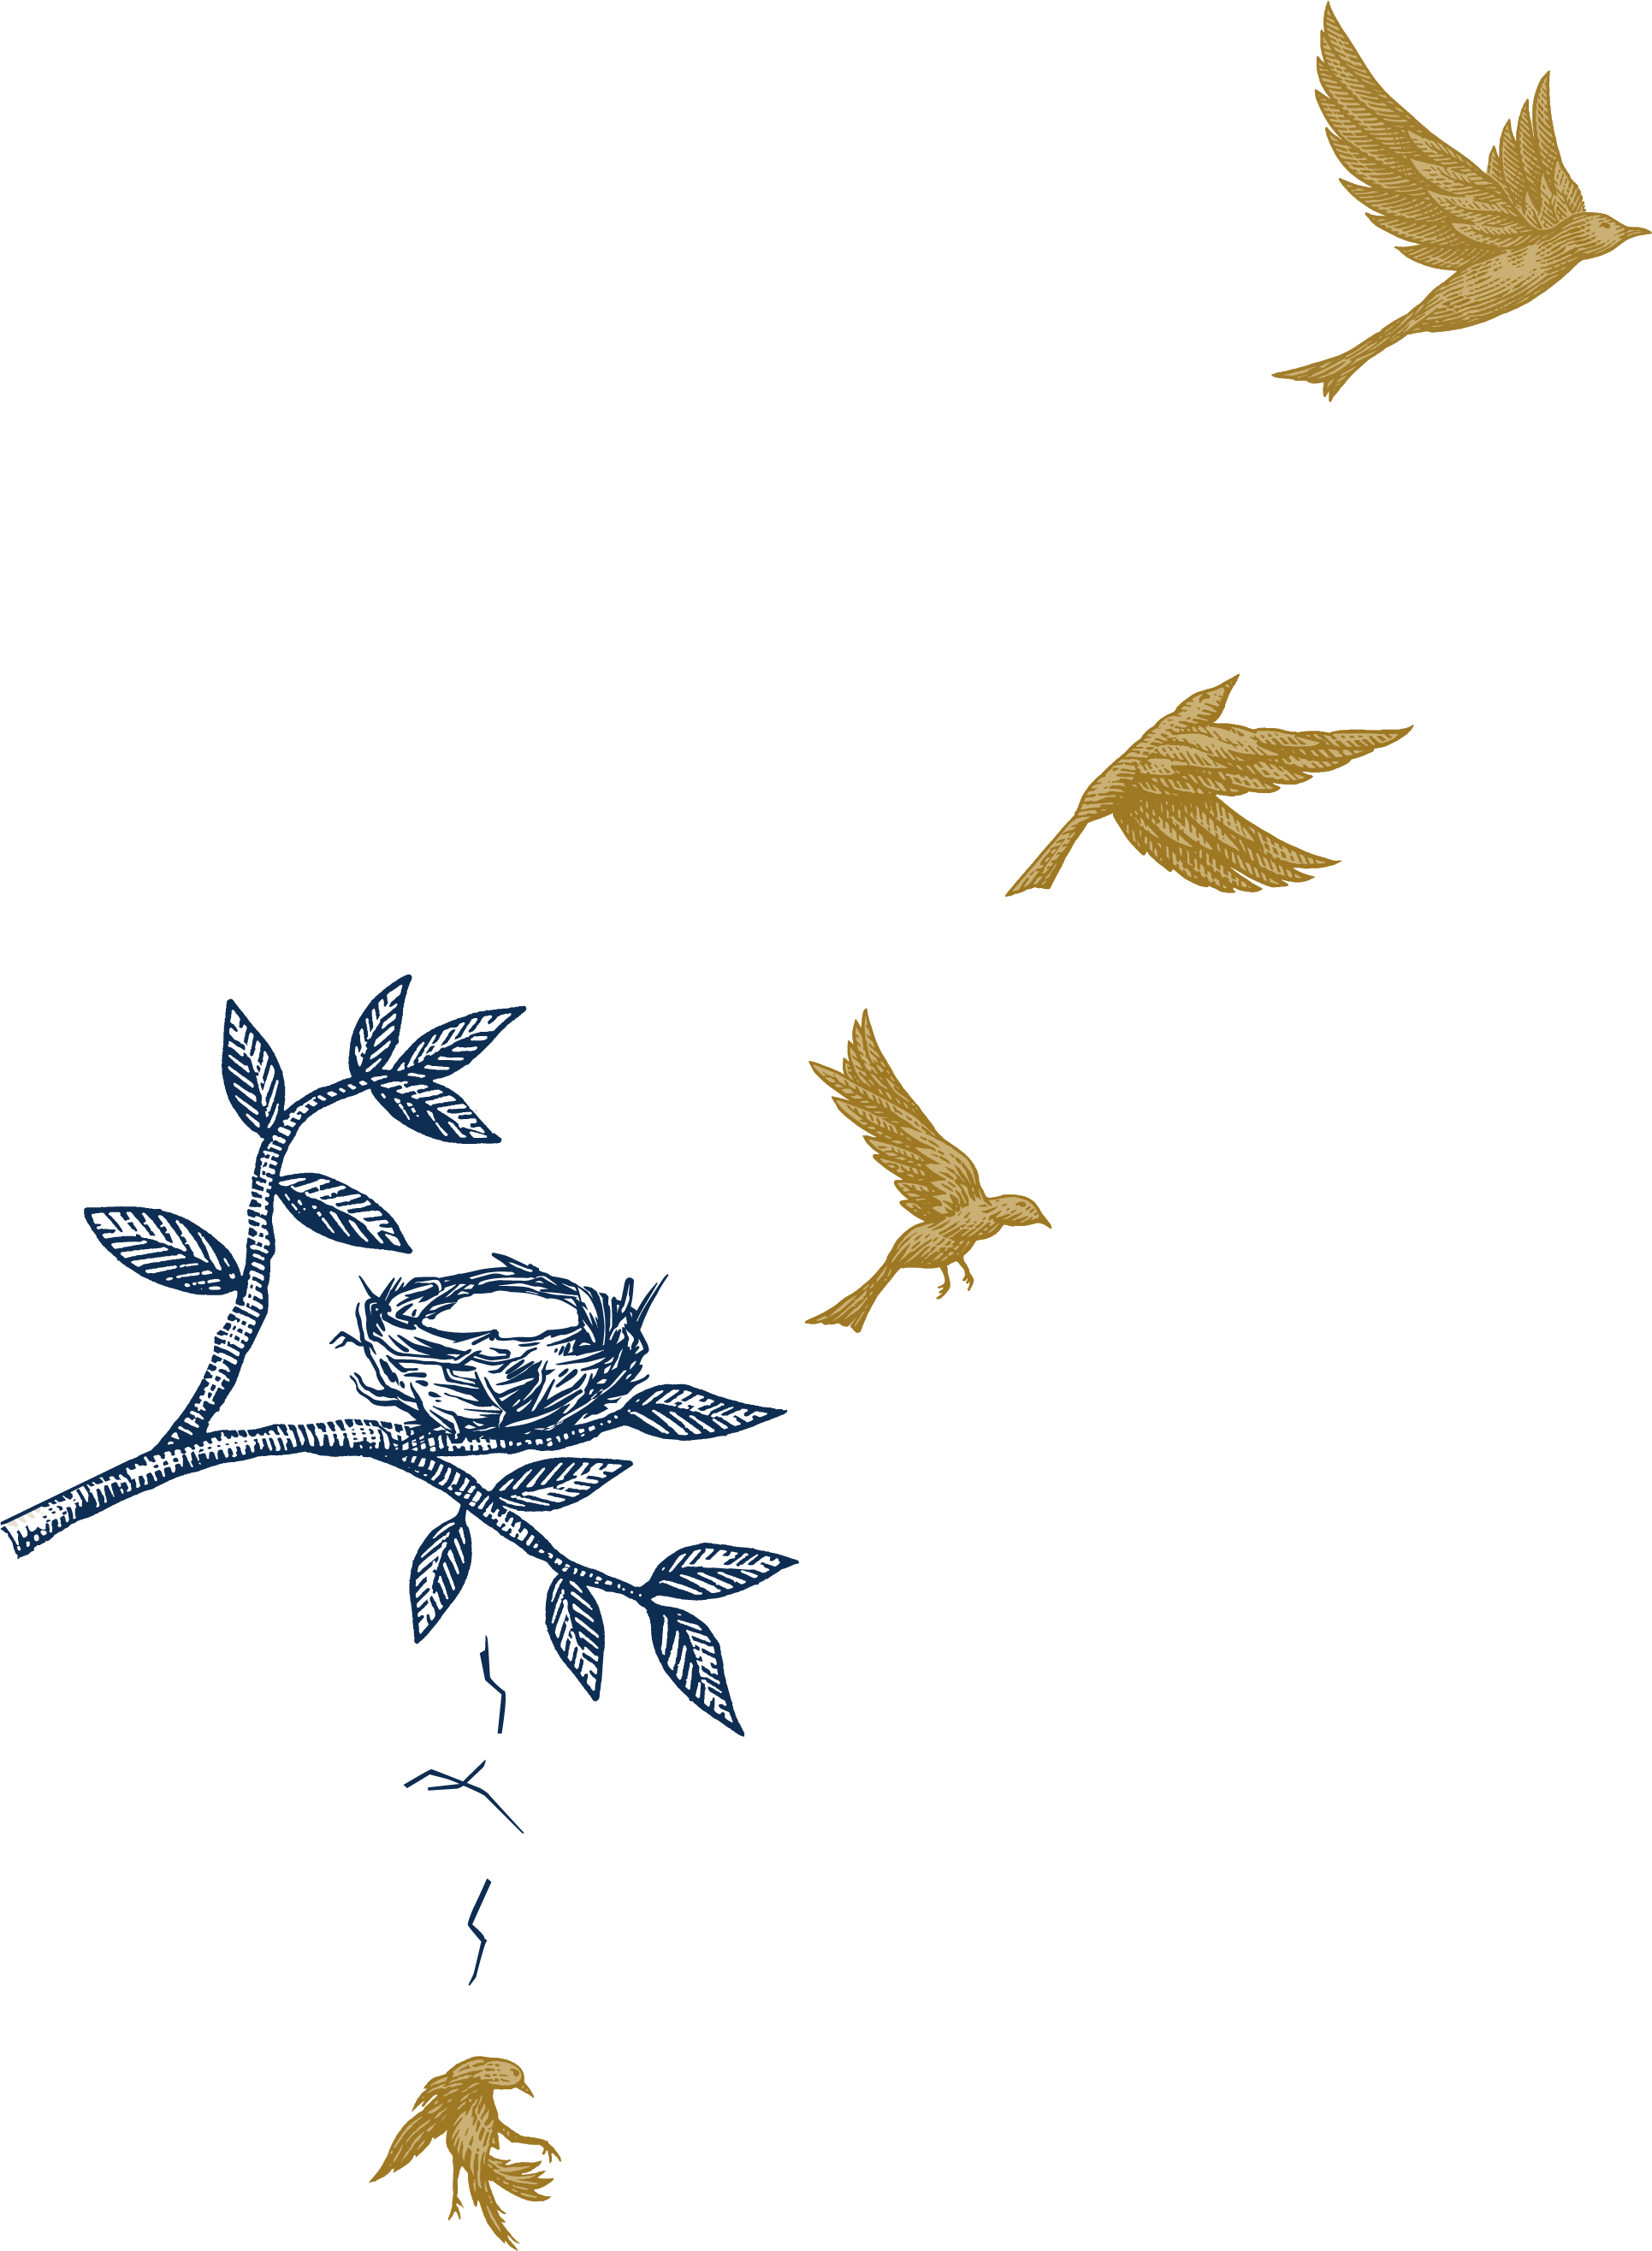 Illustration of birds in various patterns of flight from the nest.